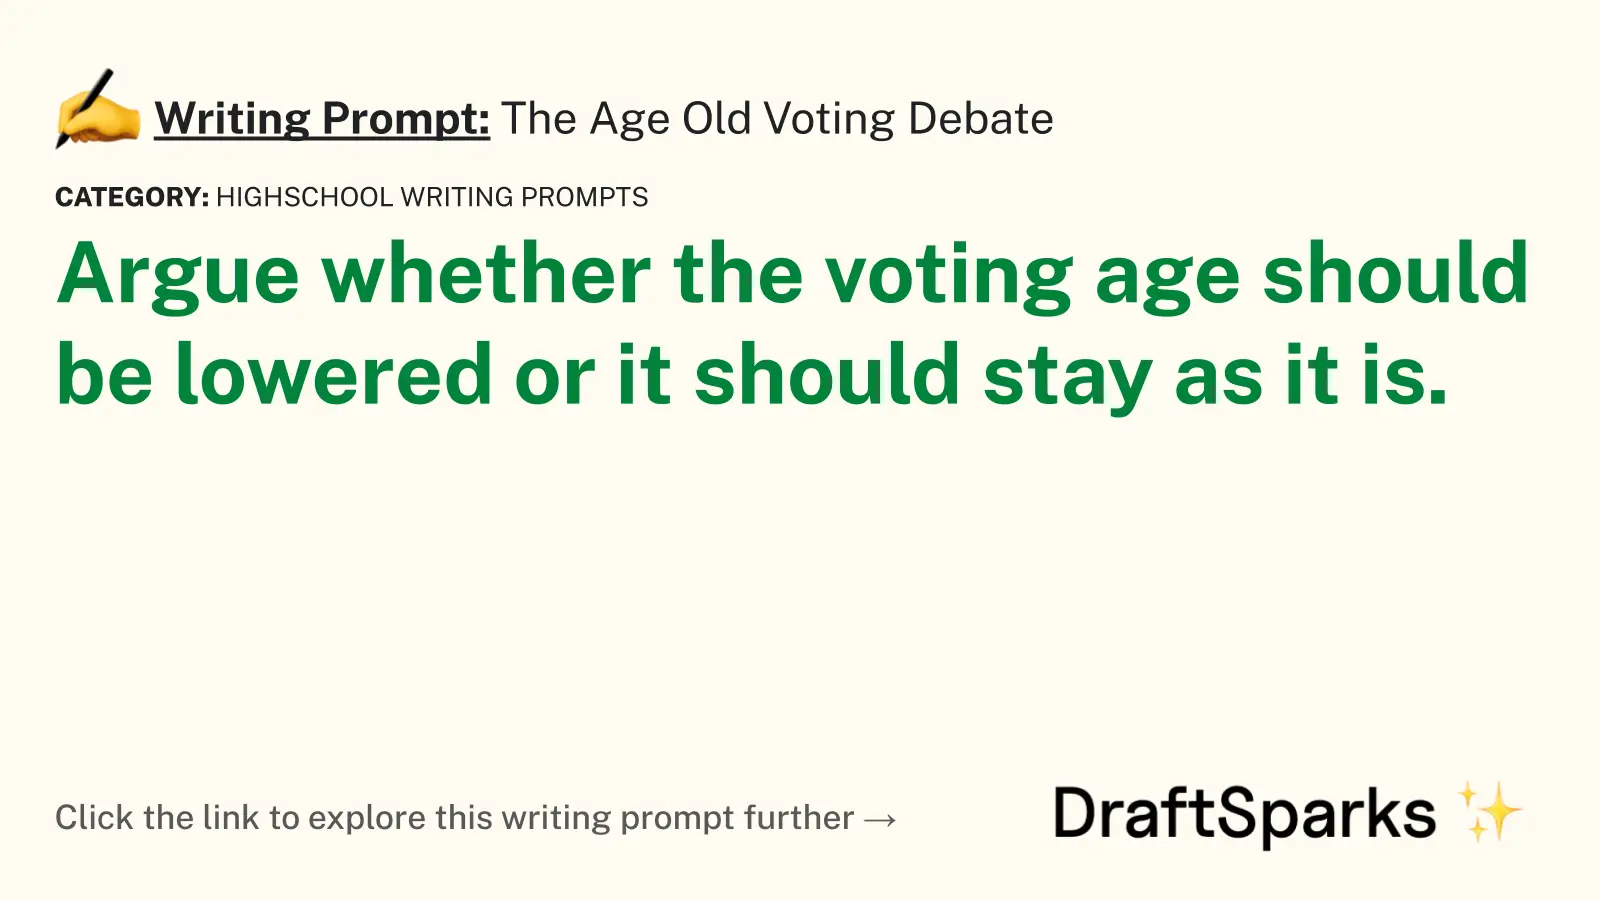 The Age Old Voting Debate